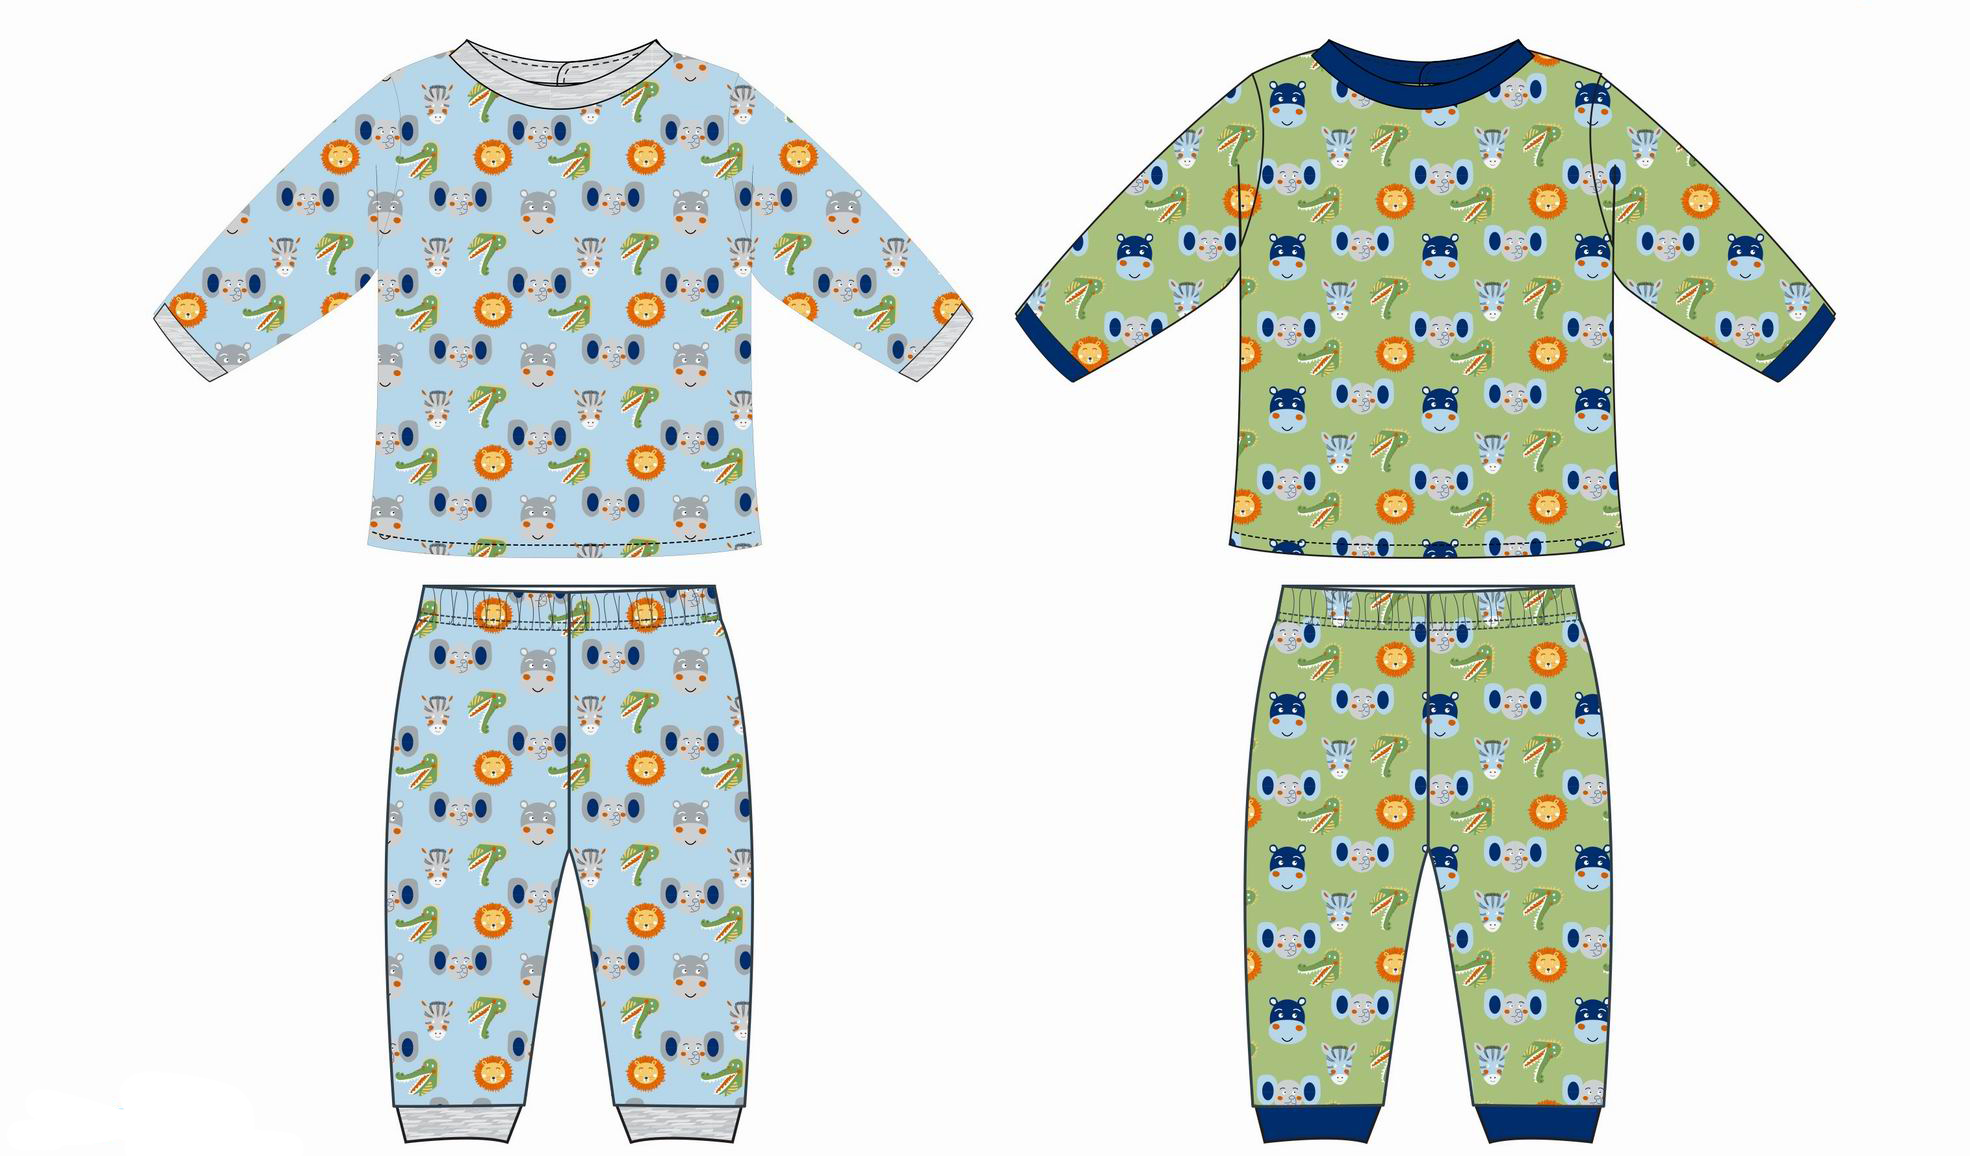 Boy's 2 PC. Rib Pajama Sets w/ Long-Sleeve SHIRT & Pull-On Pants - Safari Animal Print - Sizes 2T-4T